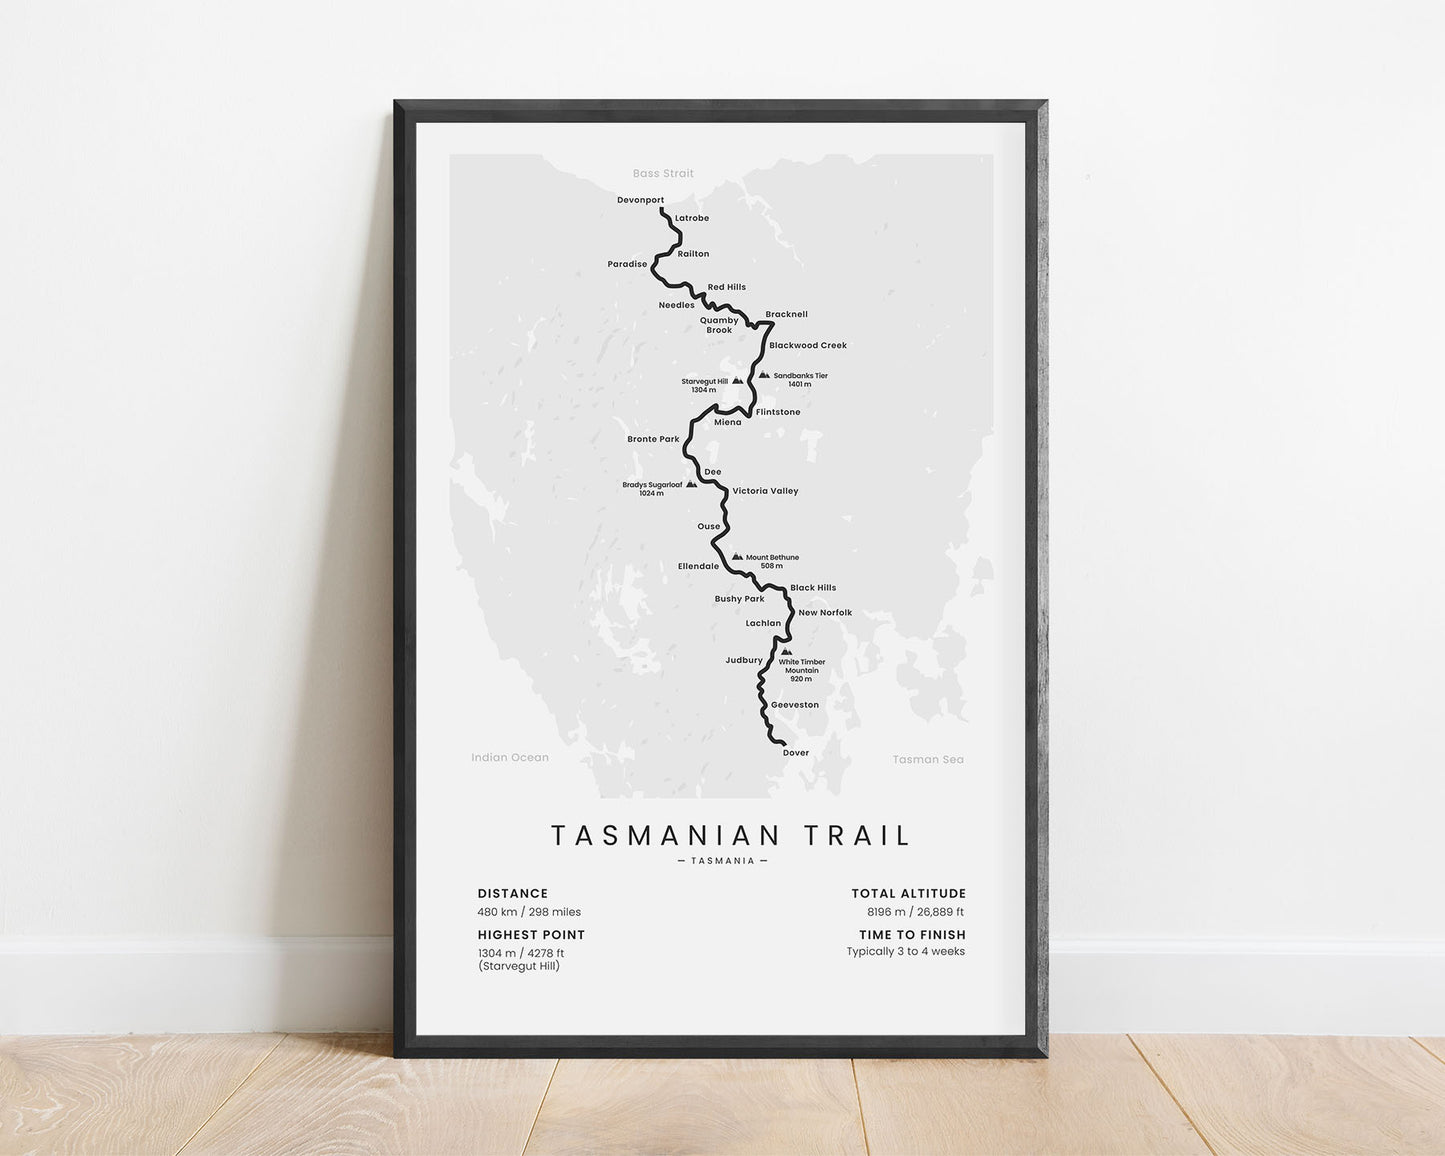 Tasmanian Trail (Australia) Hike Route Poster with White Background